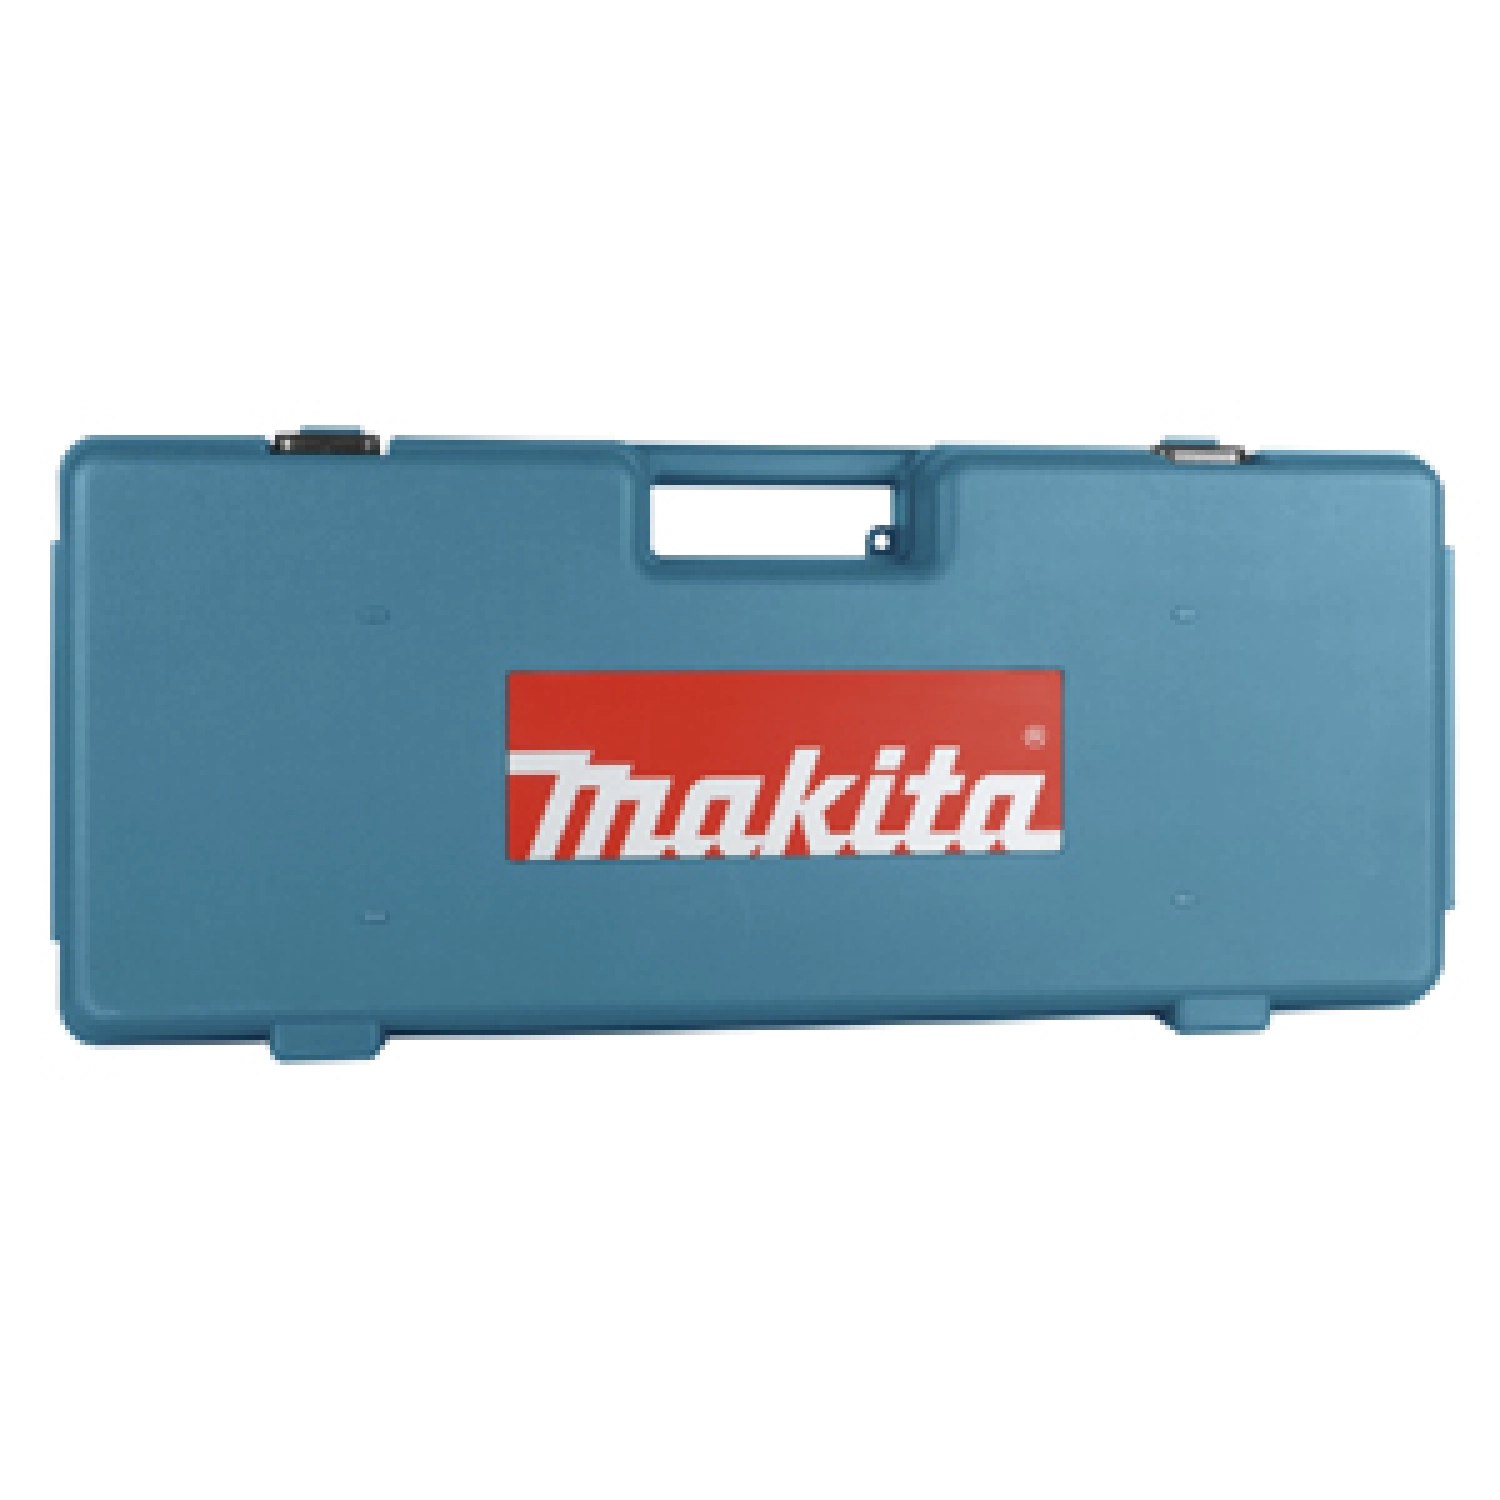 Makita 824539-7 Coffret pour Scie sabre